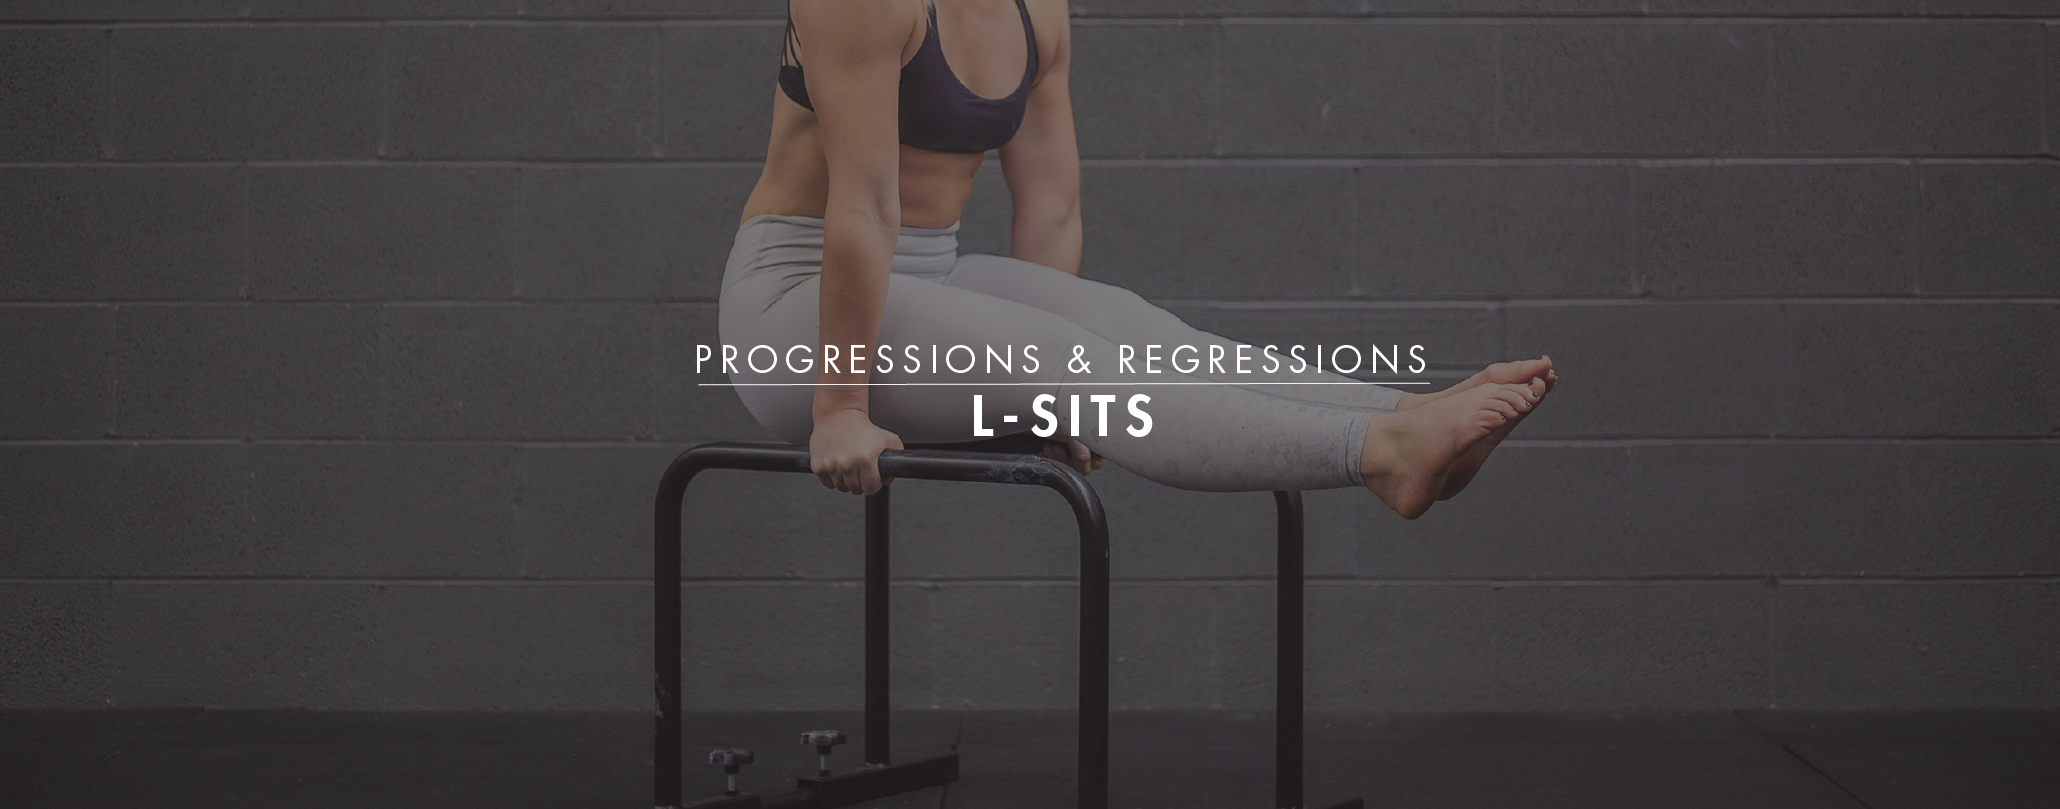 Progressions & Regressions: L-Sit